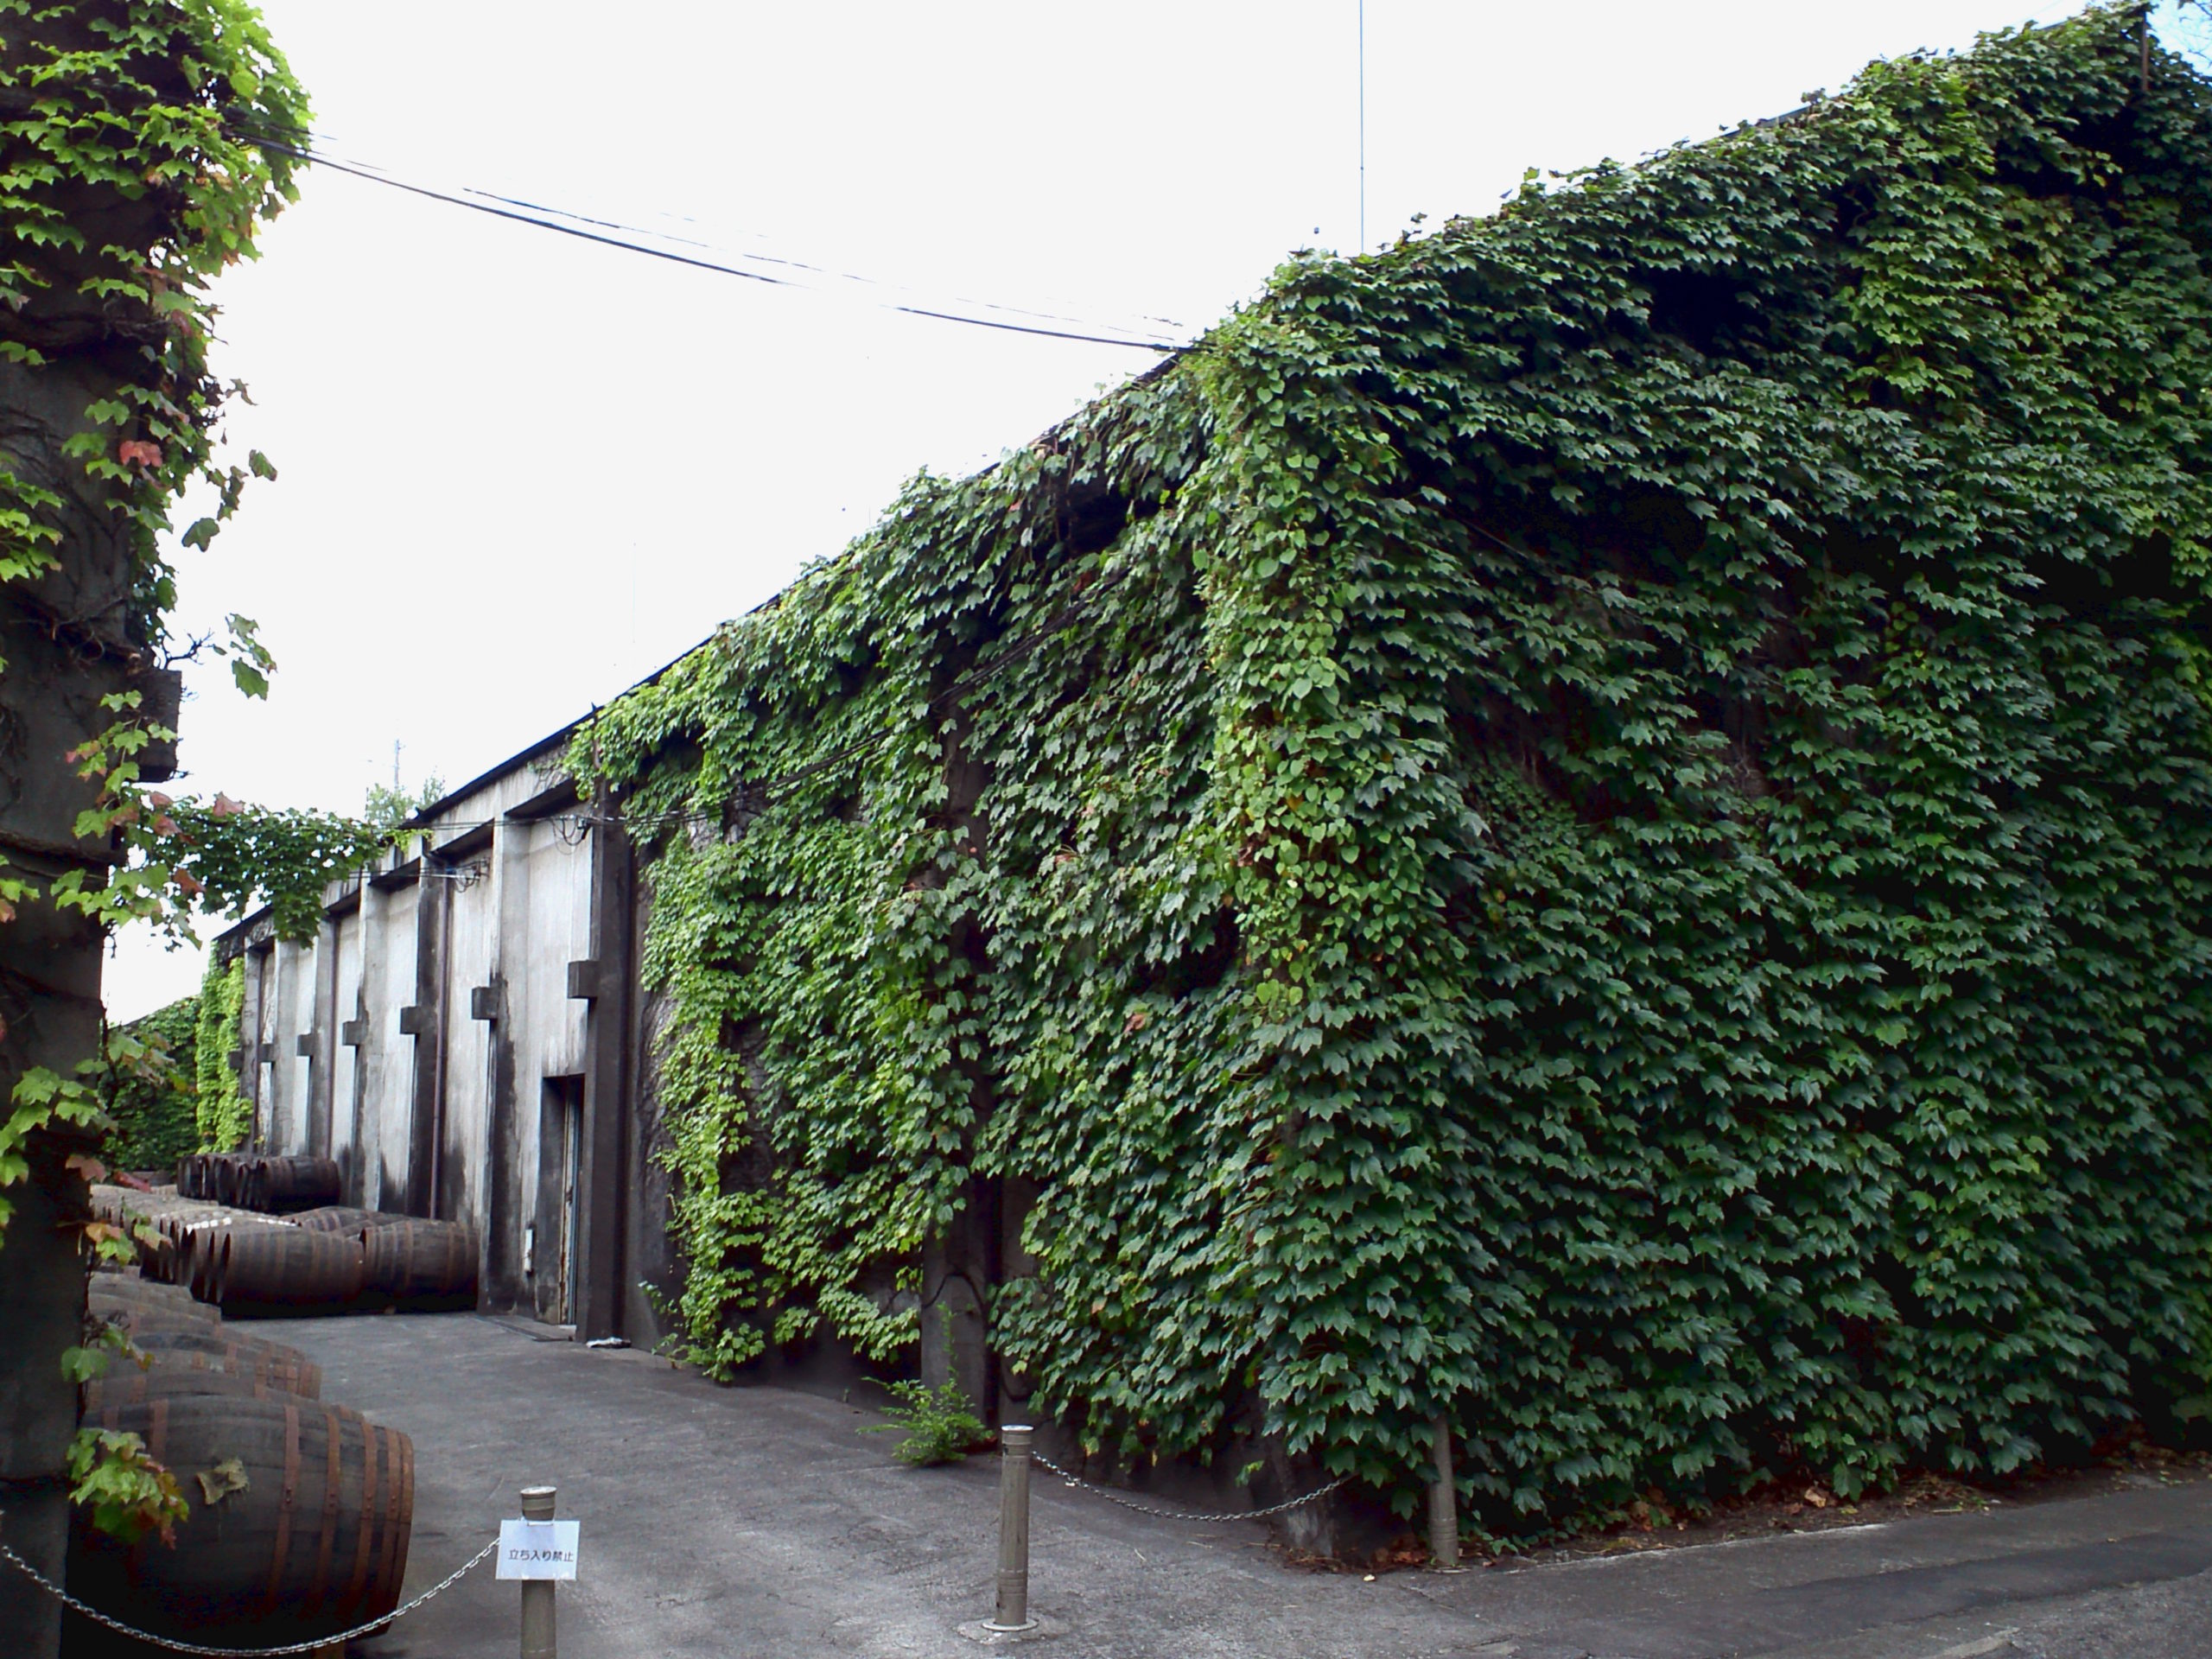 Karuizawa distillery was razed in 2015.